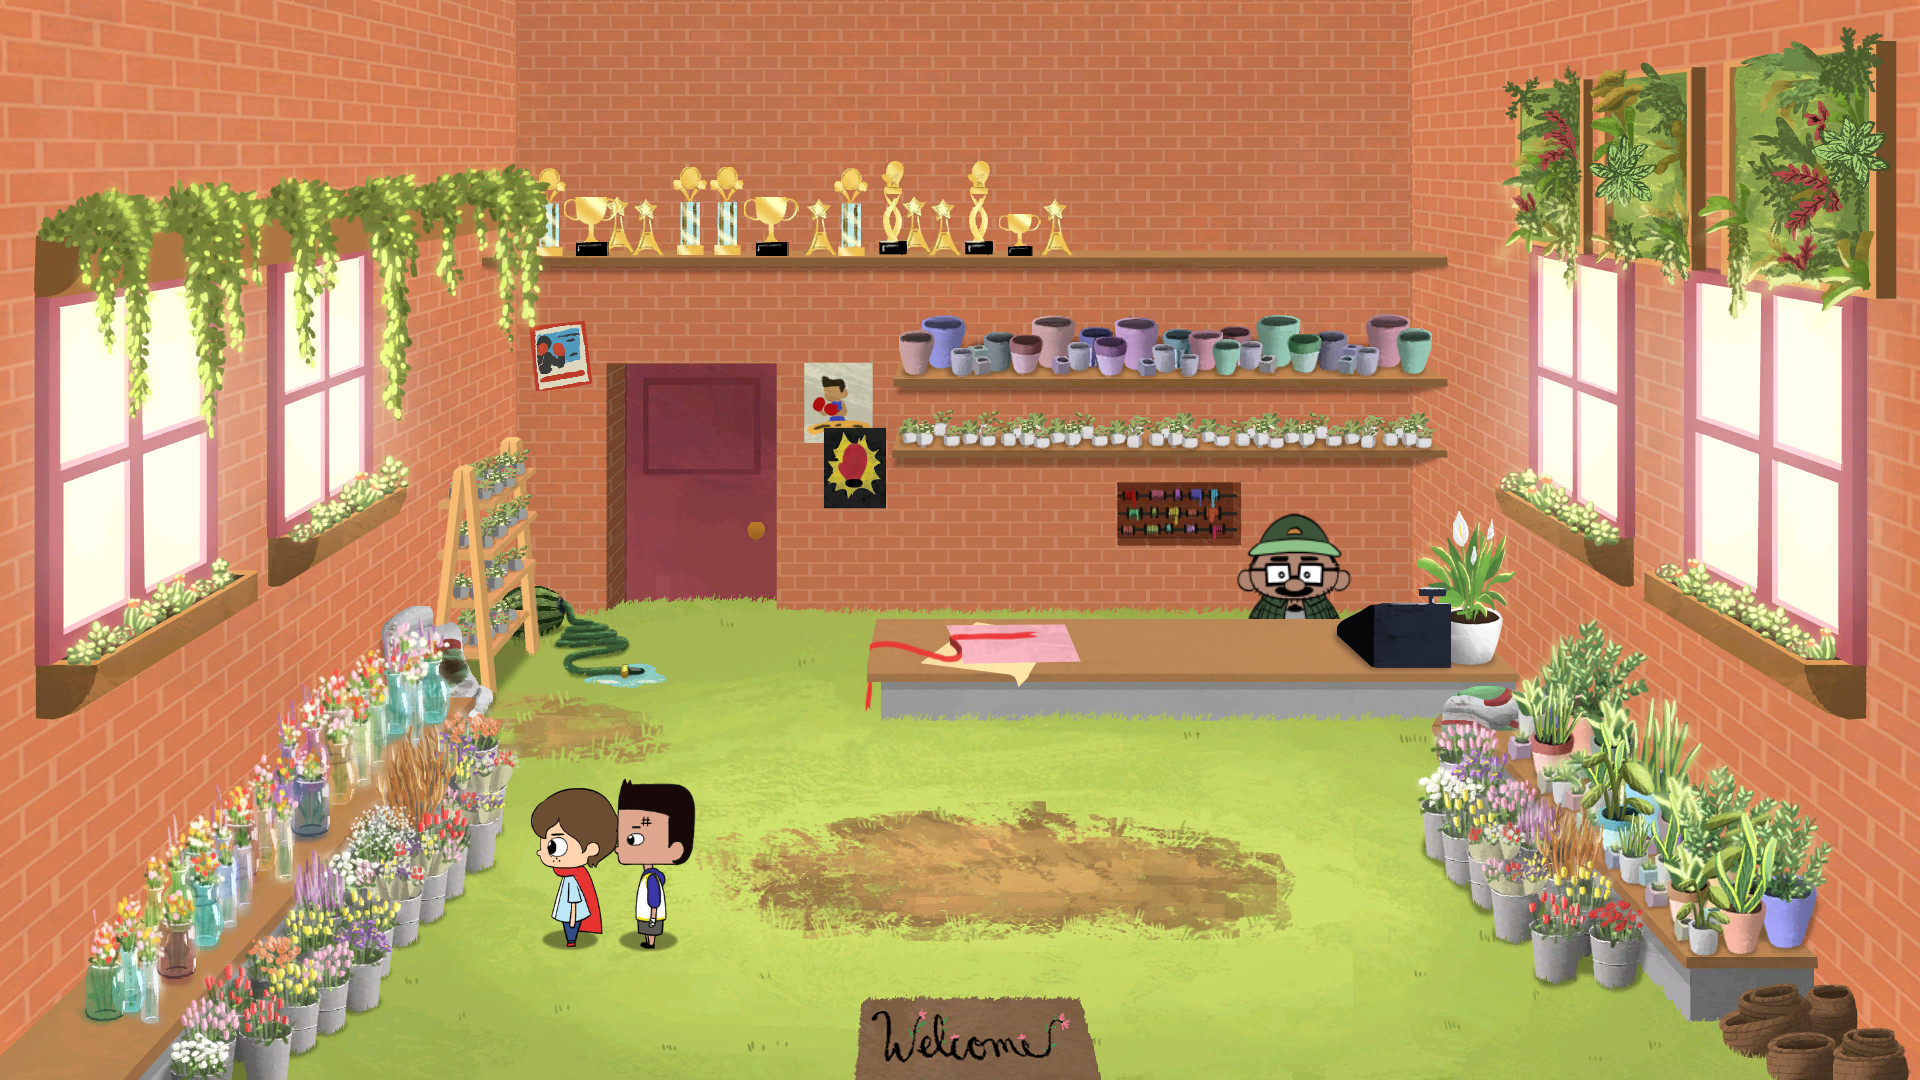 Cricket: Jae's Really Peculiar Game screenshot